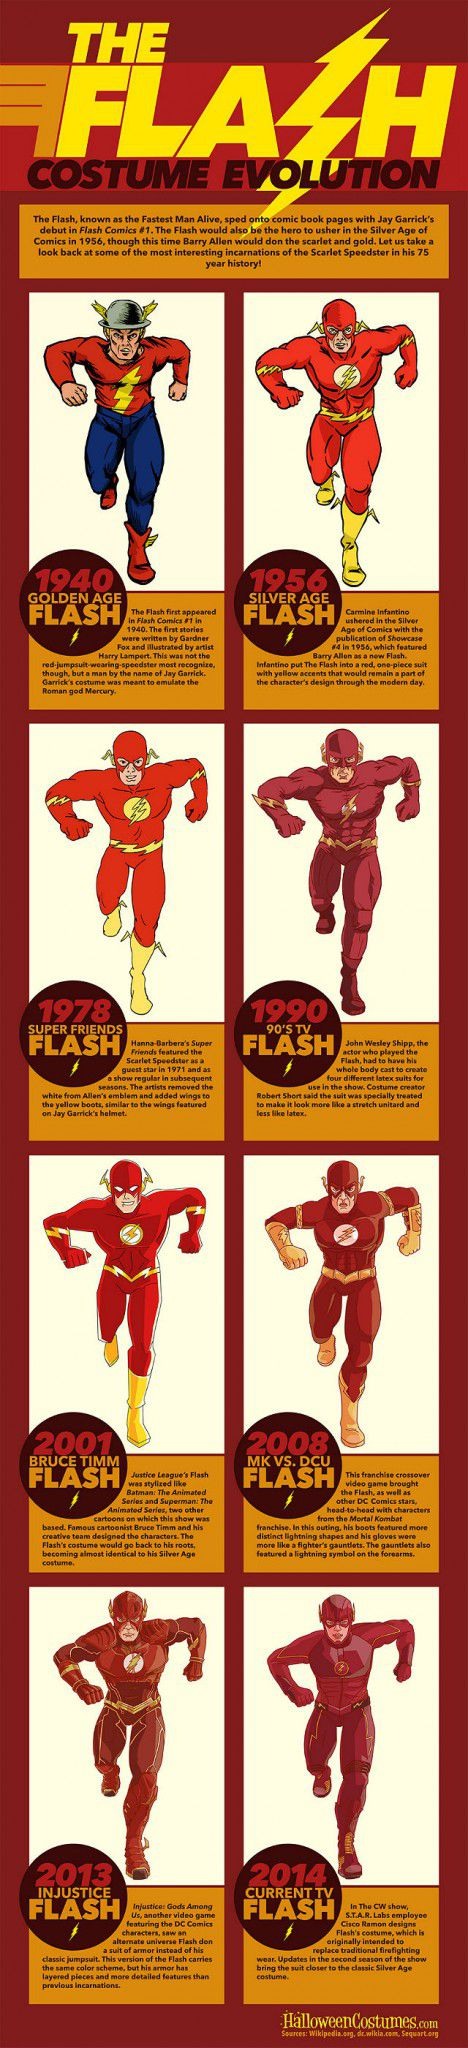 Flash-Evolution-Infographic